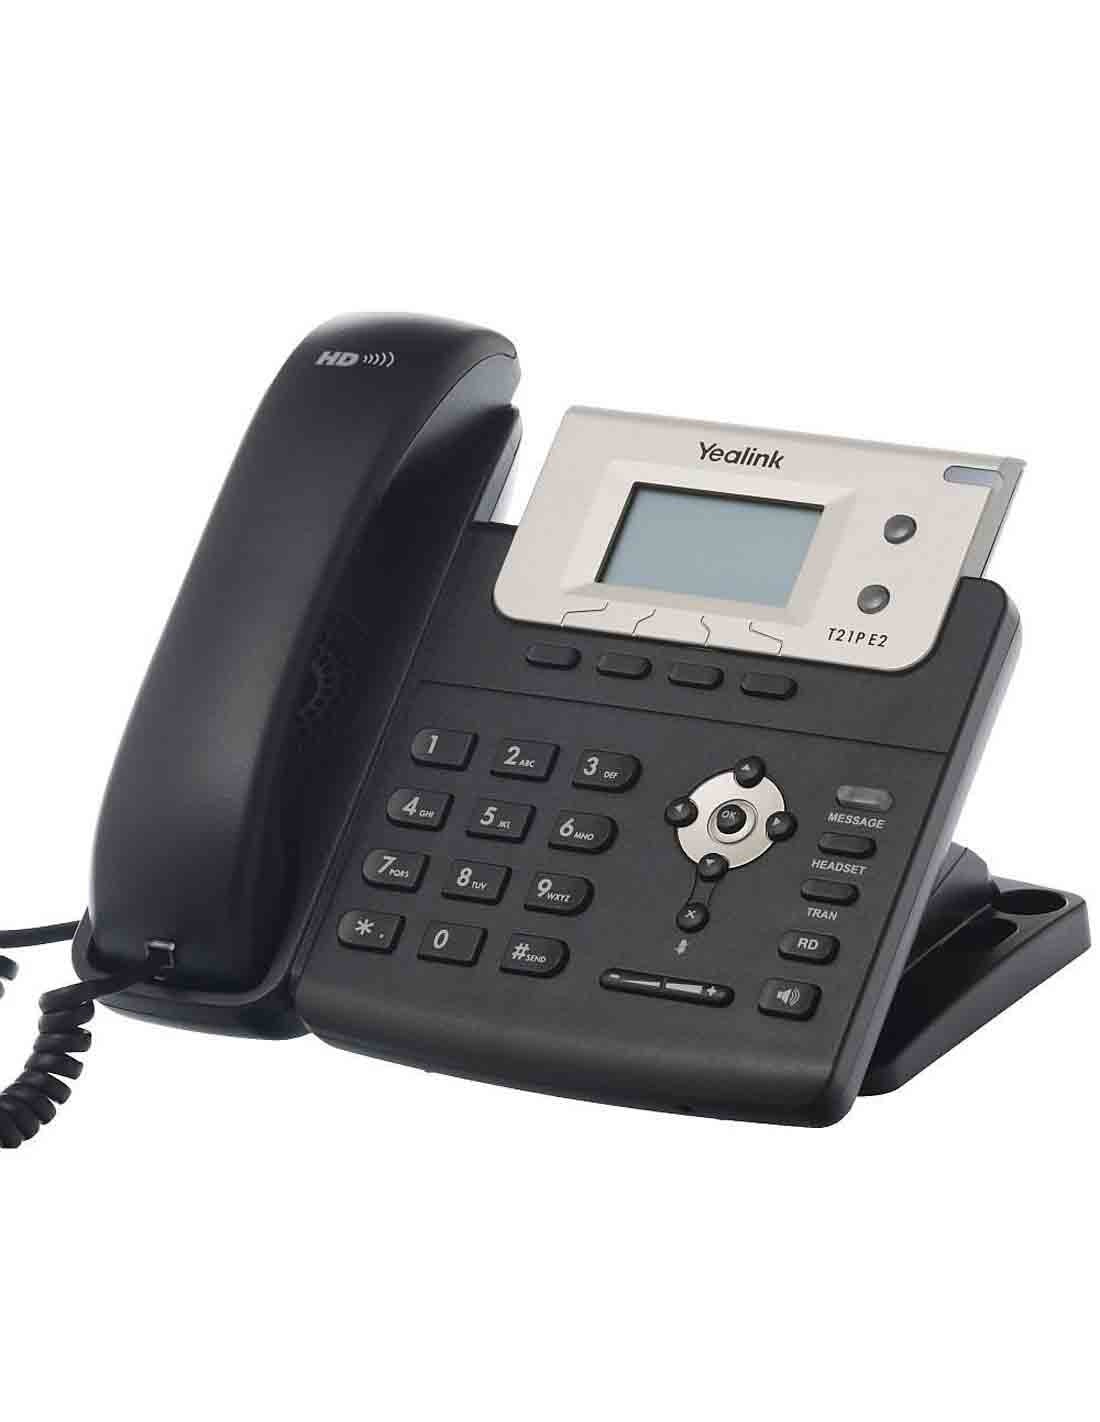 Yealink SIP-T21P E2 IP Phone at a Cheap Price in Dubai UAE